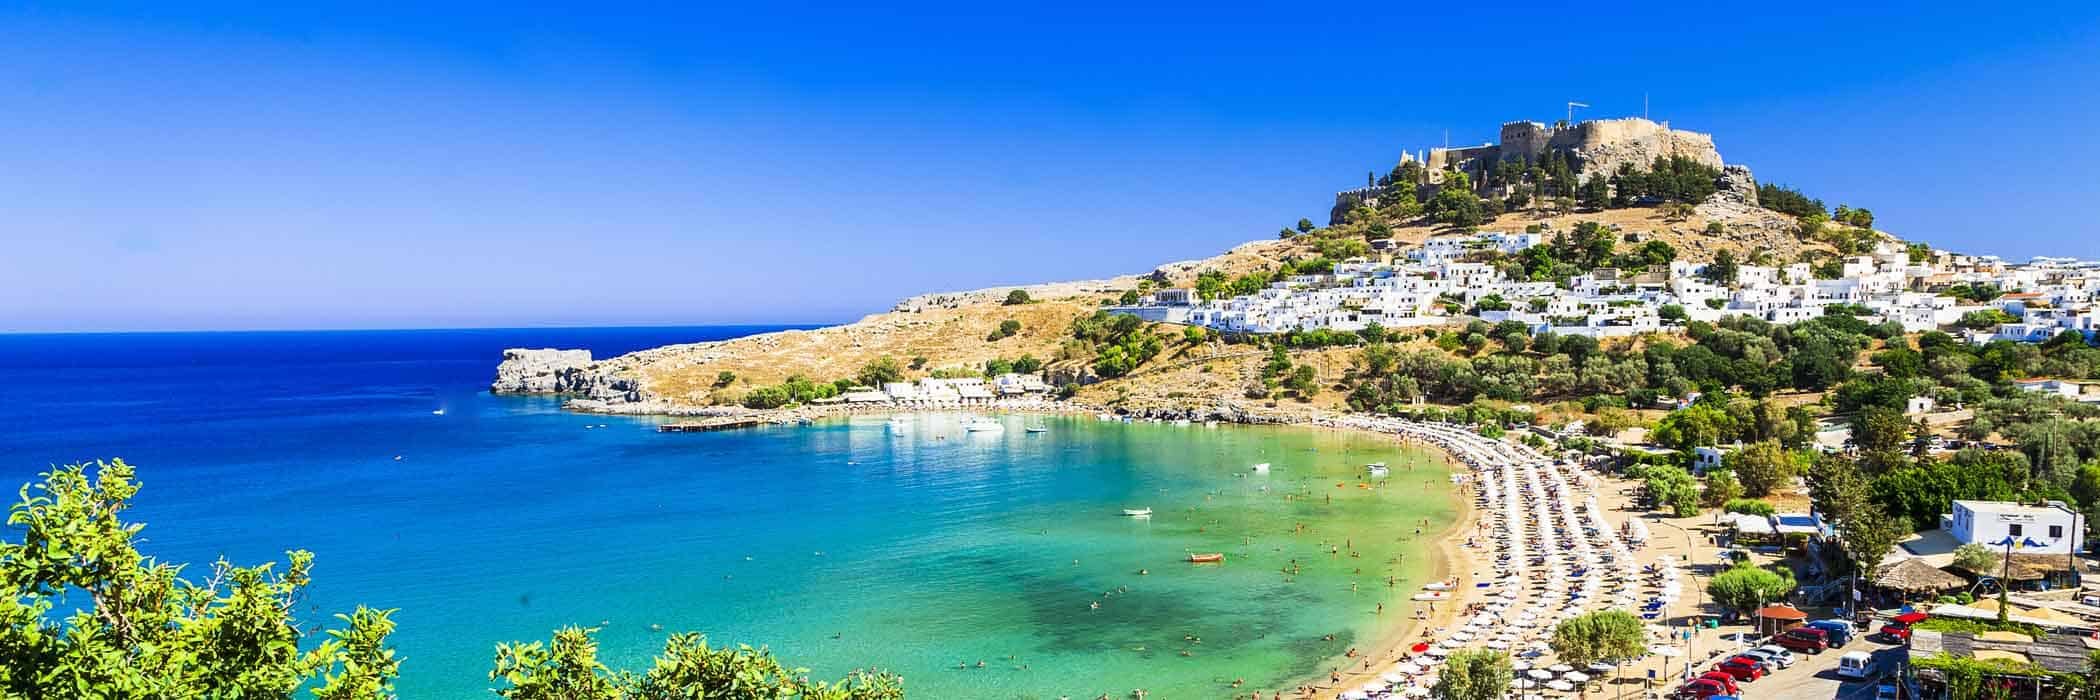 Lindos Beach, Rhodes, Greece - Holidays To Rhodes